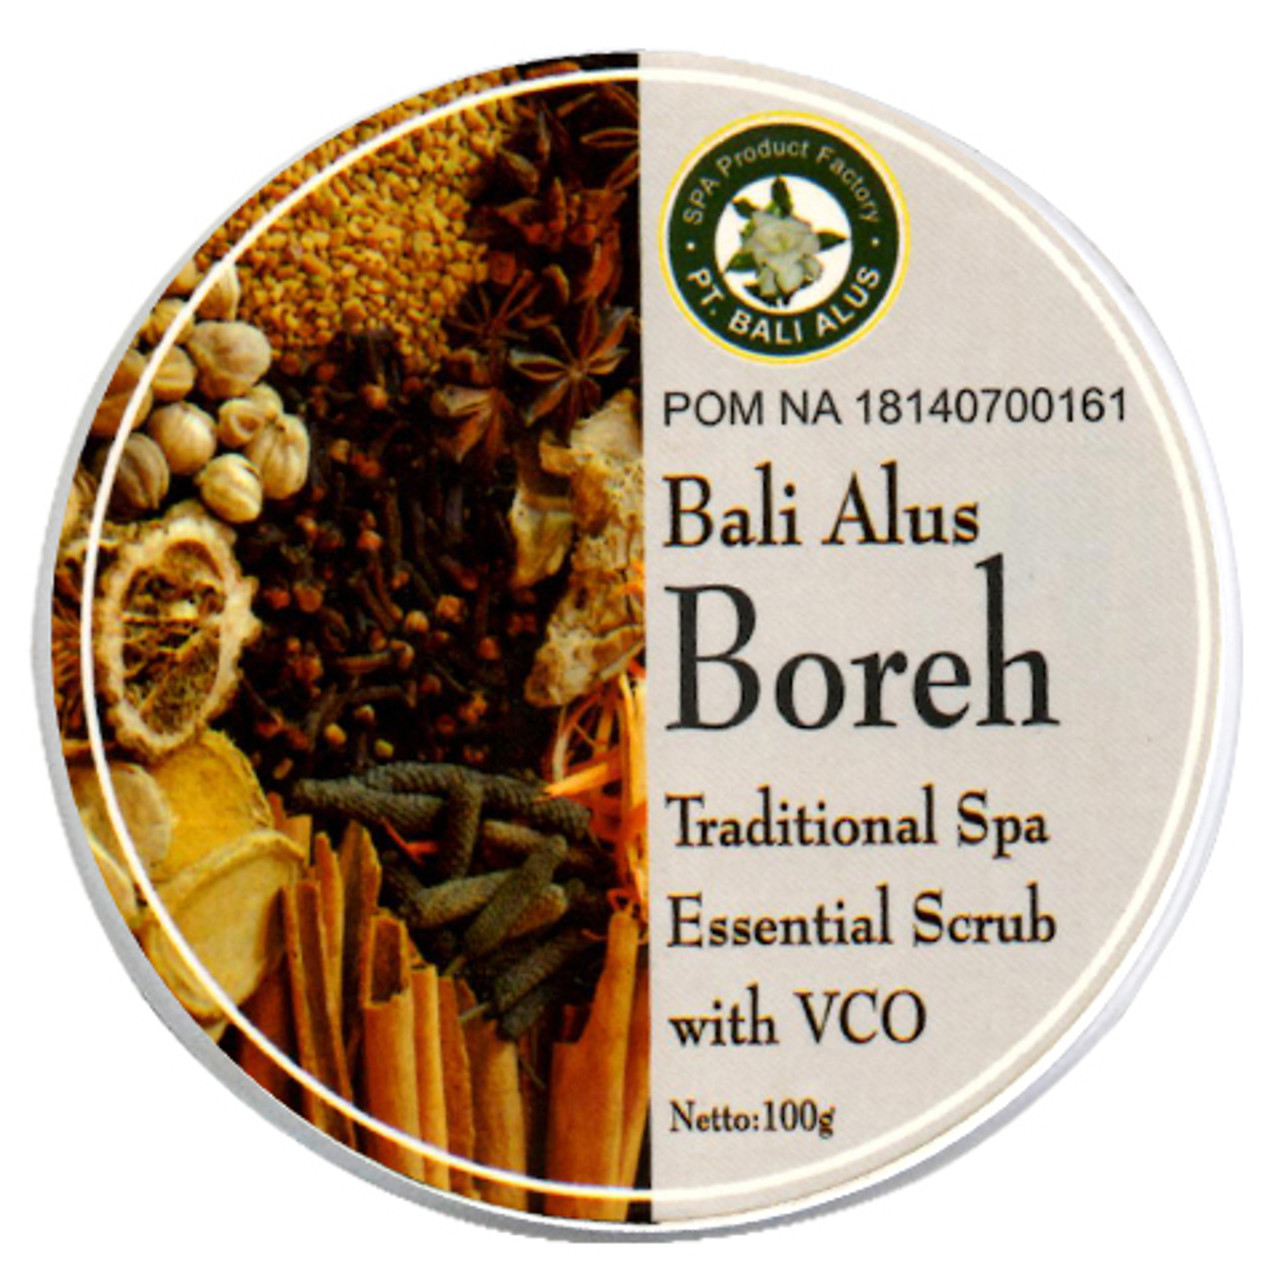 BALI ALUS Lulur Cream Scrub Boreh, 100gr